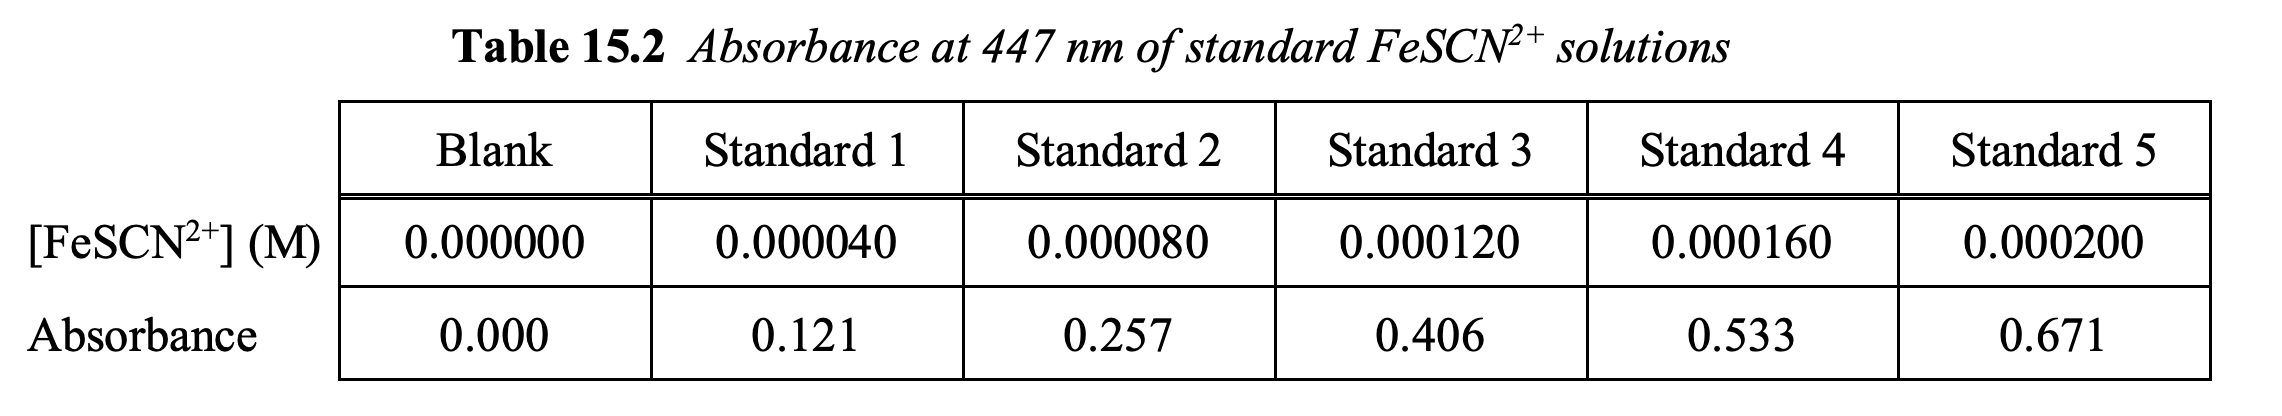 Table 15.2 Absorbance at 447 nm of standard FeSCN2+ solutions
Blank
Standard 1
Standard 2
Standard 3
Standard 4
Standard 5
[FESCN2*] (M)
0.000000
0.000040
0.000080
0.000120
0.000160
0.000200
Absorbance
0.000
0.121
0.257
0.406
0.533
0.671
